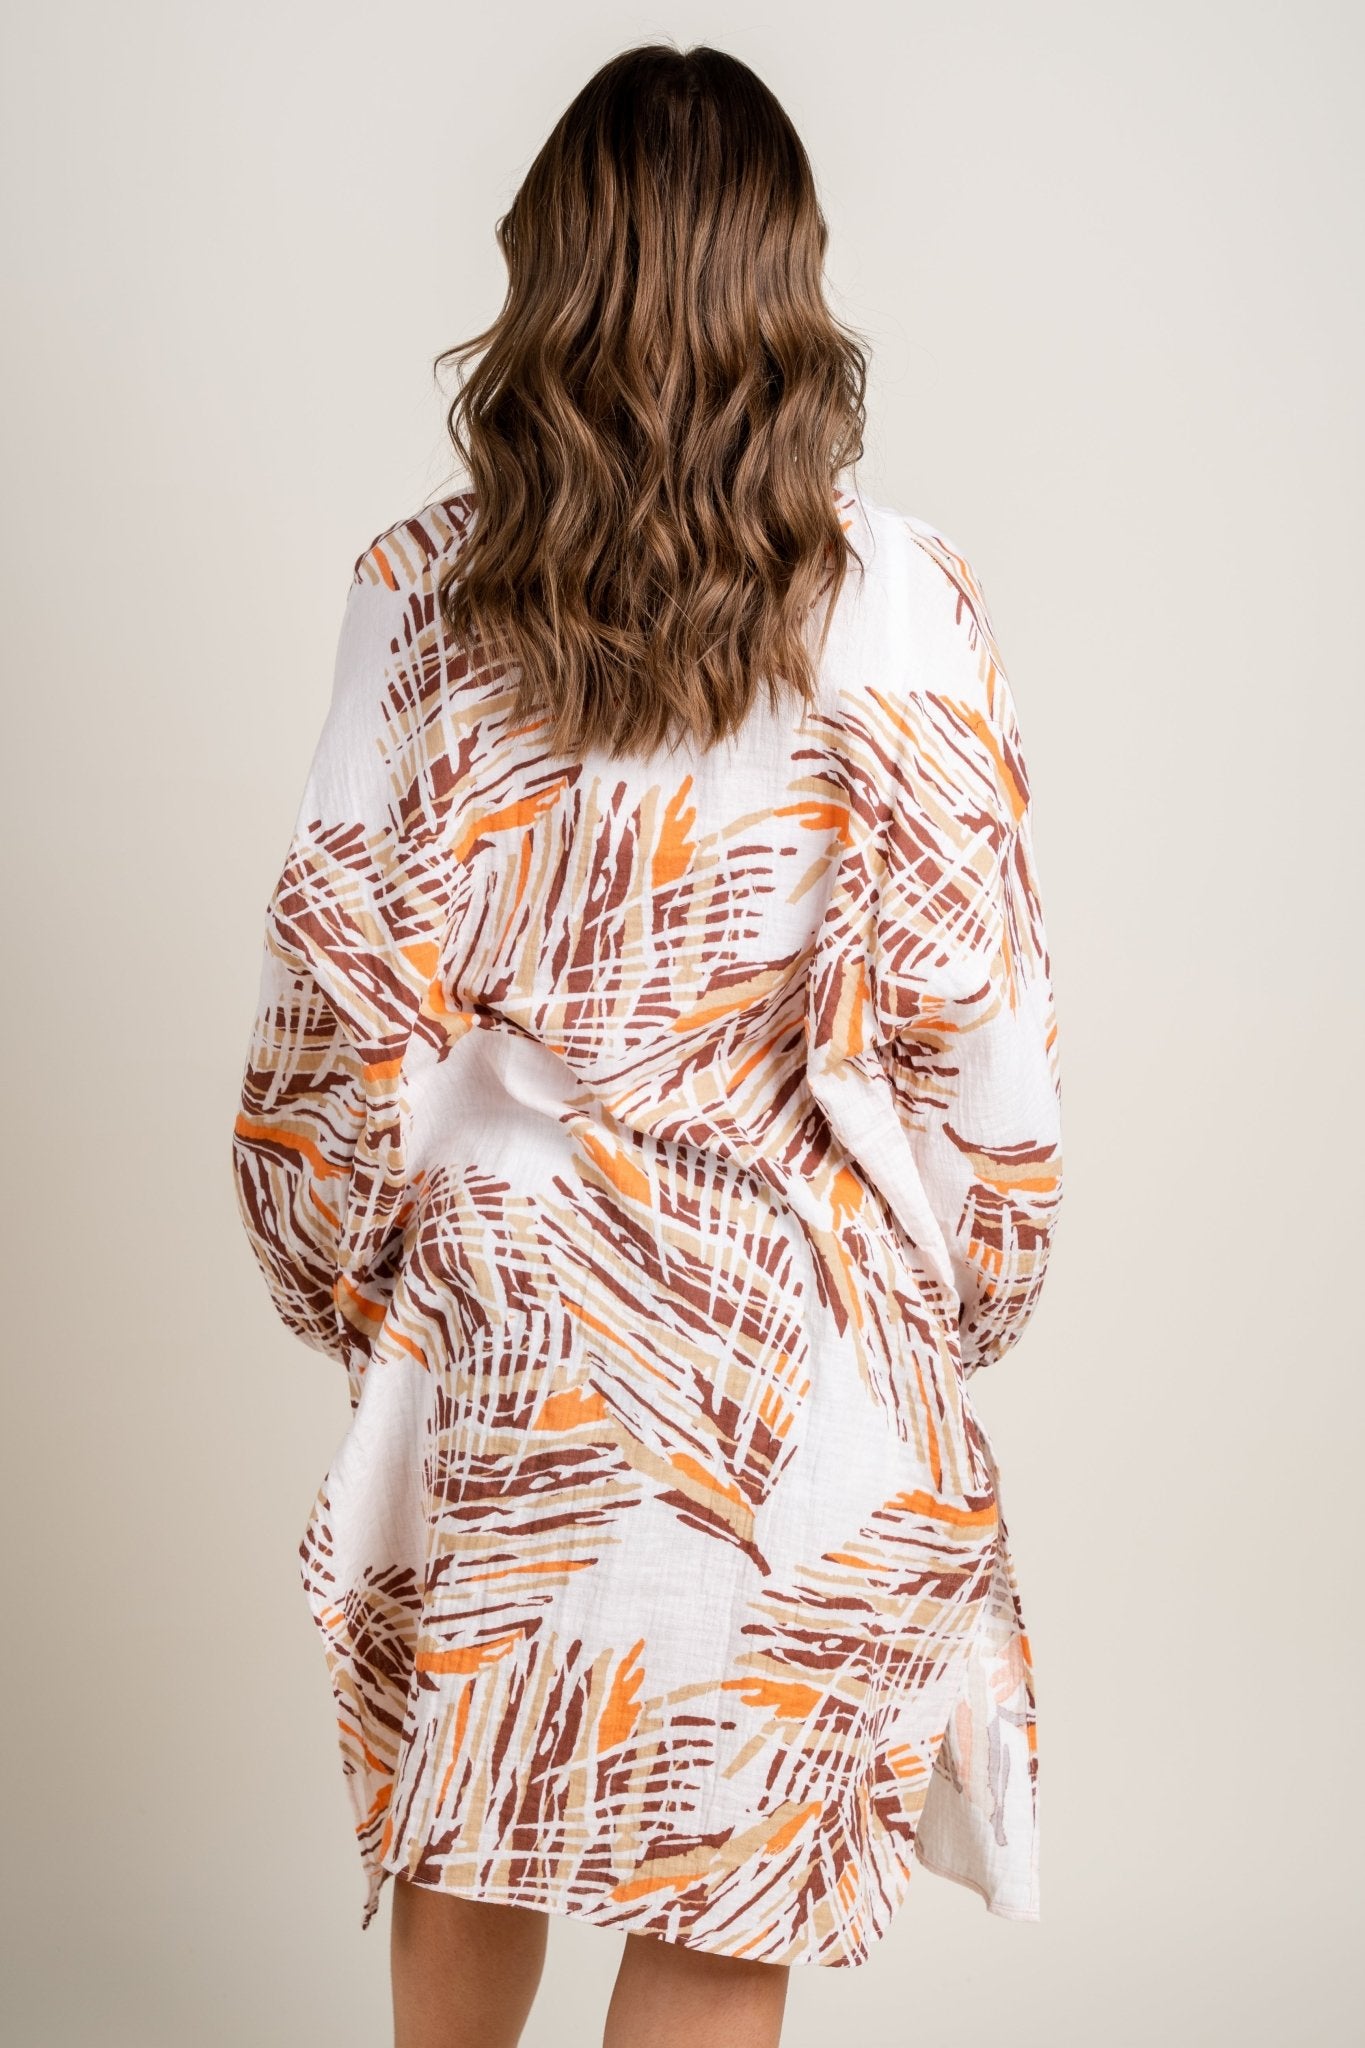 Printed long sleeve kimono orange/brown - Adorable Kimonos - Stylish Vacation T-Shirts at Lush Fashion Lounge Boutique in Oklahoma City